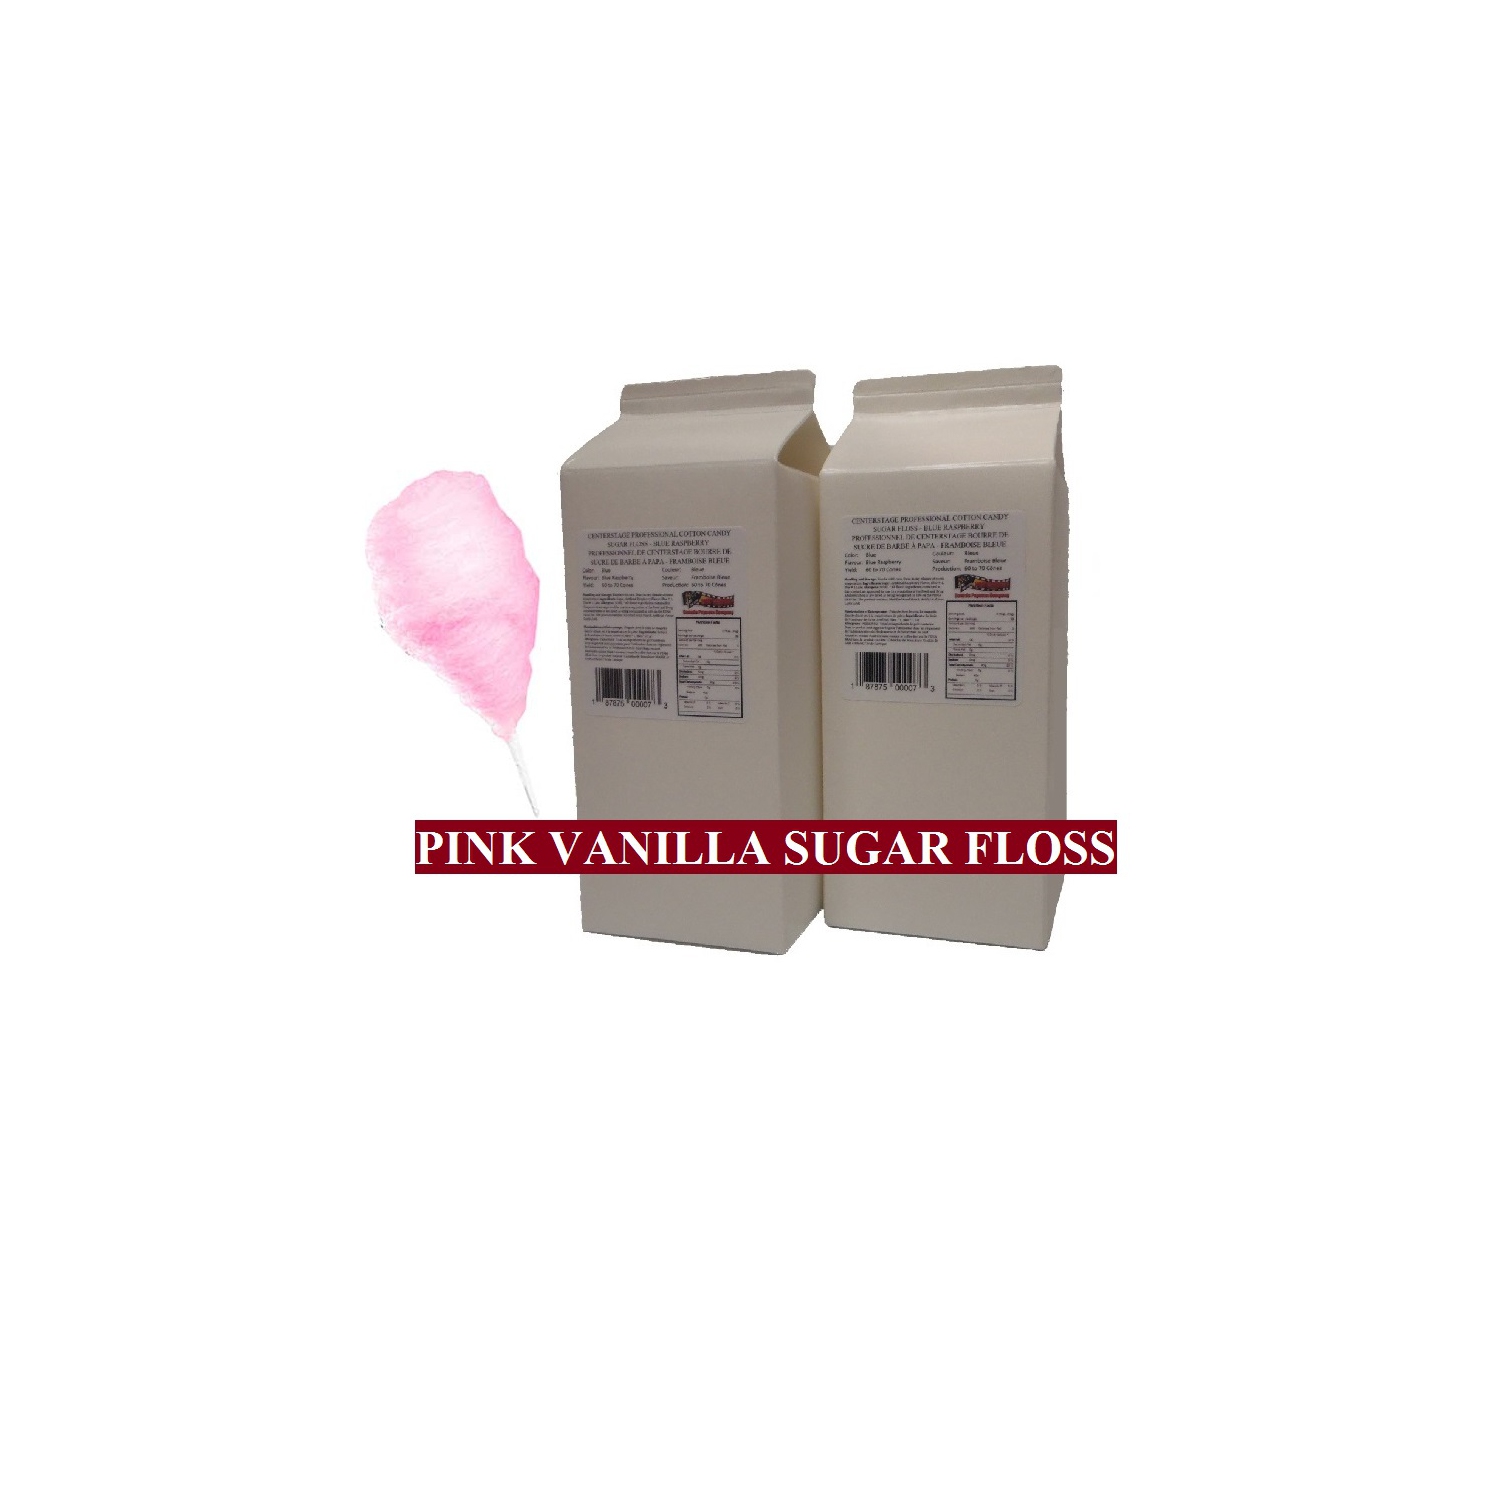 Centerstage Professional Cotton Candy Sugar Floss - Pink Vanilla - 2 Carton Pack